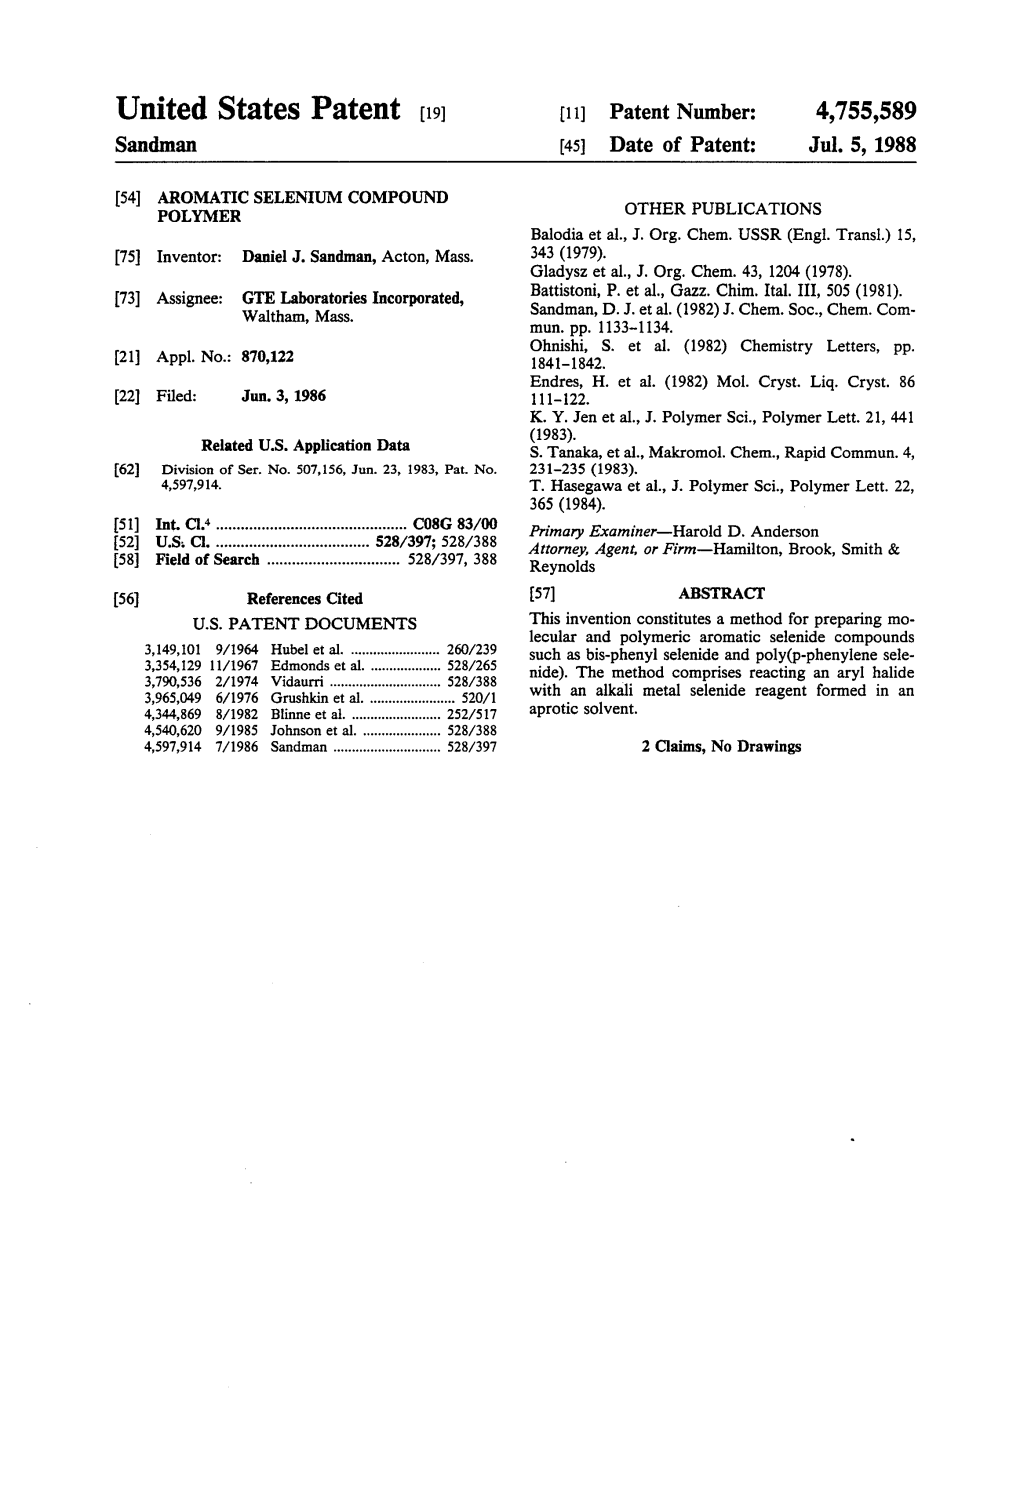 United States Patent (19) 11 Patent Number: 4,755,589 Sandman (45) Date of Patent: Jul